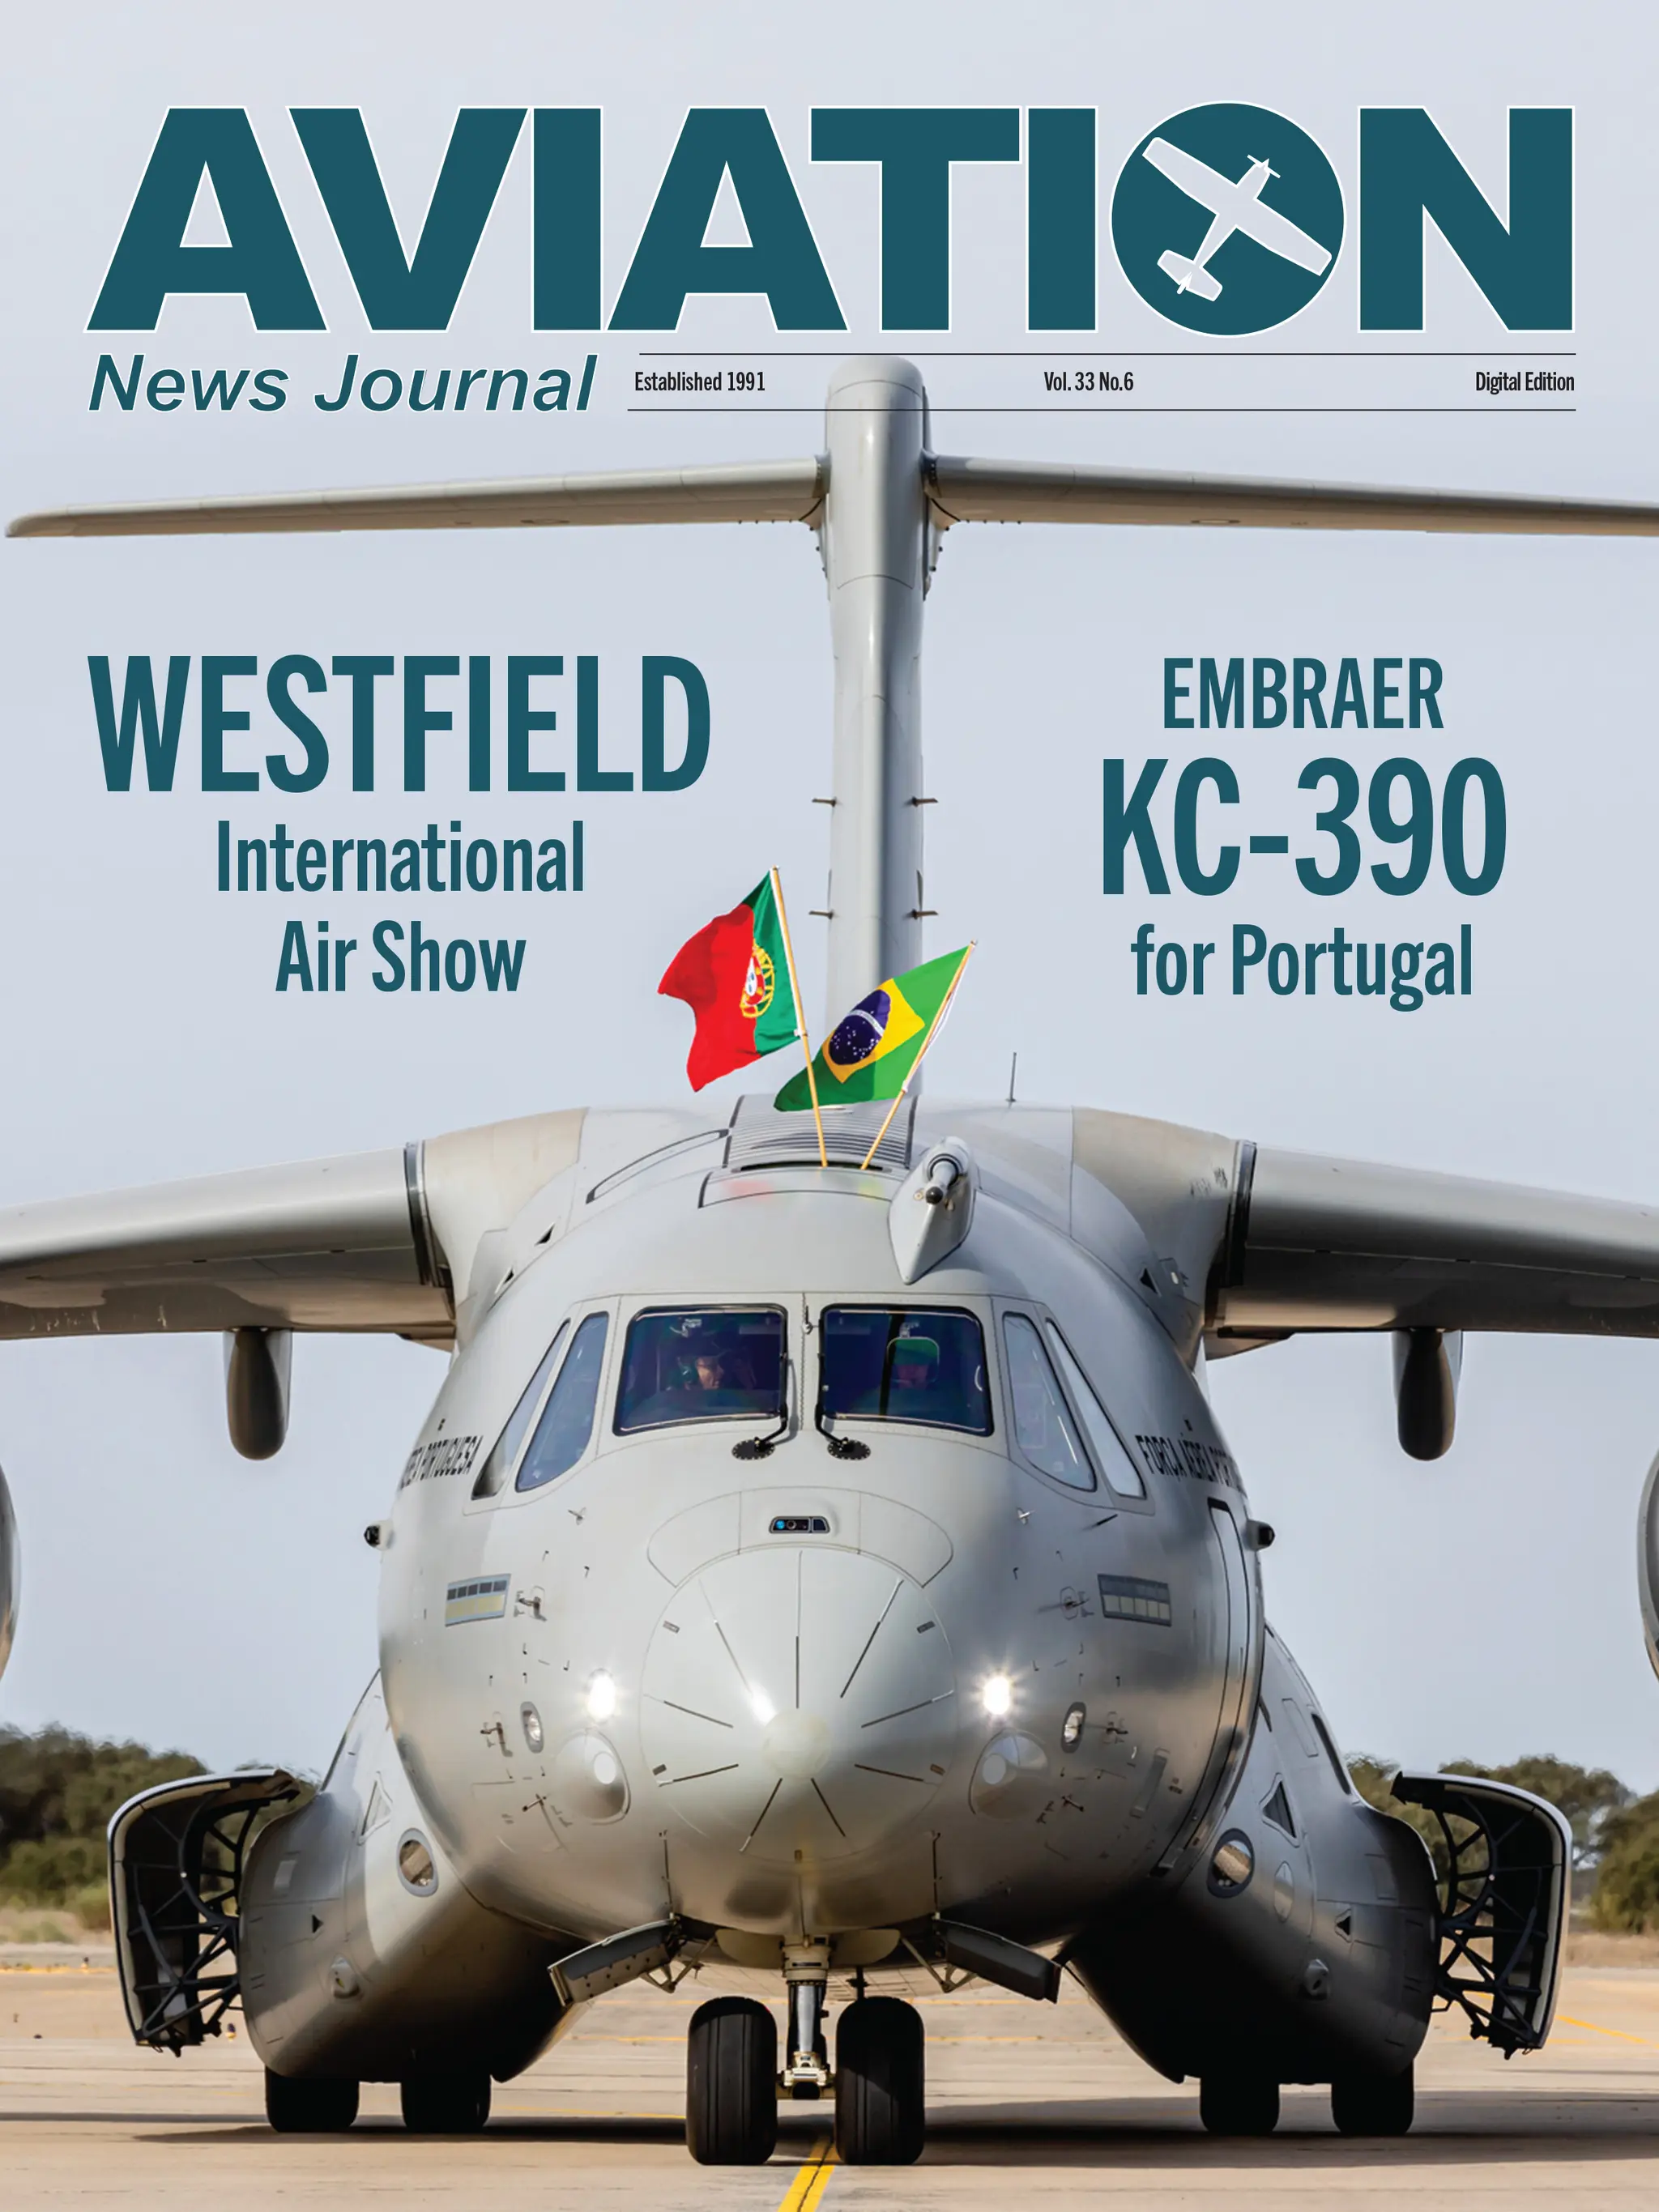 Aviation News Journal - Vol.33 No.6